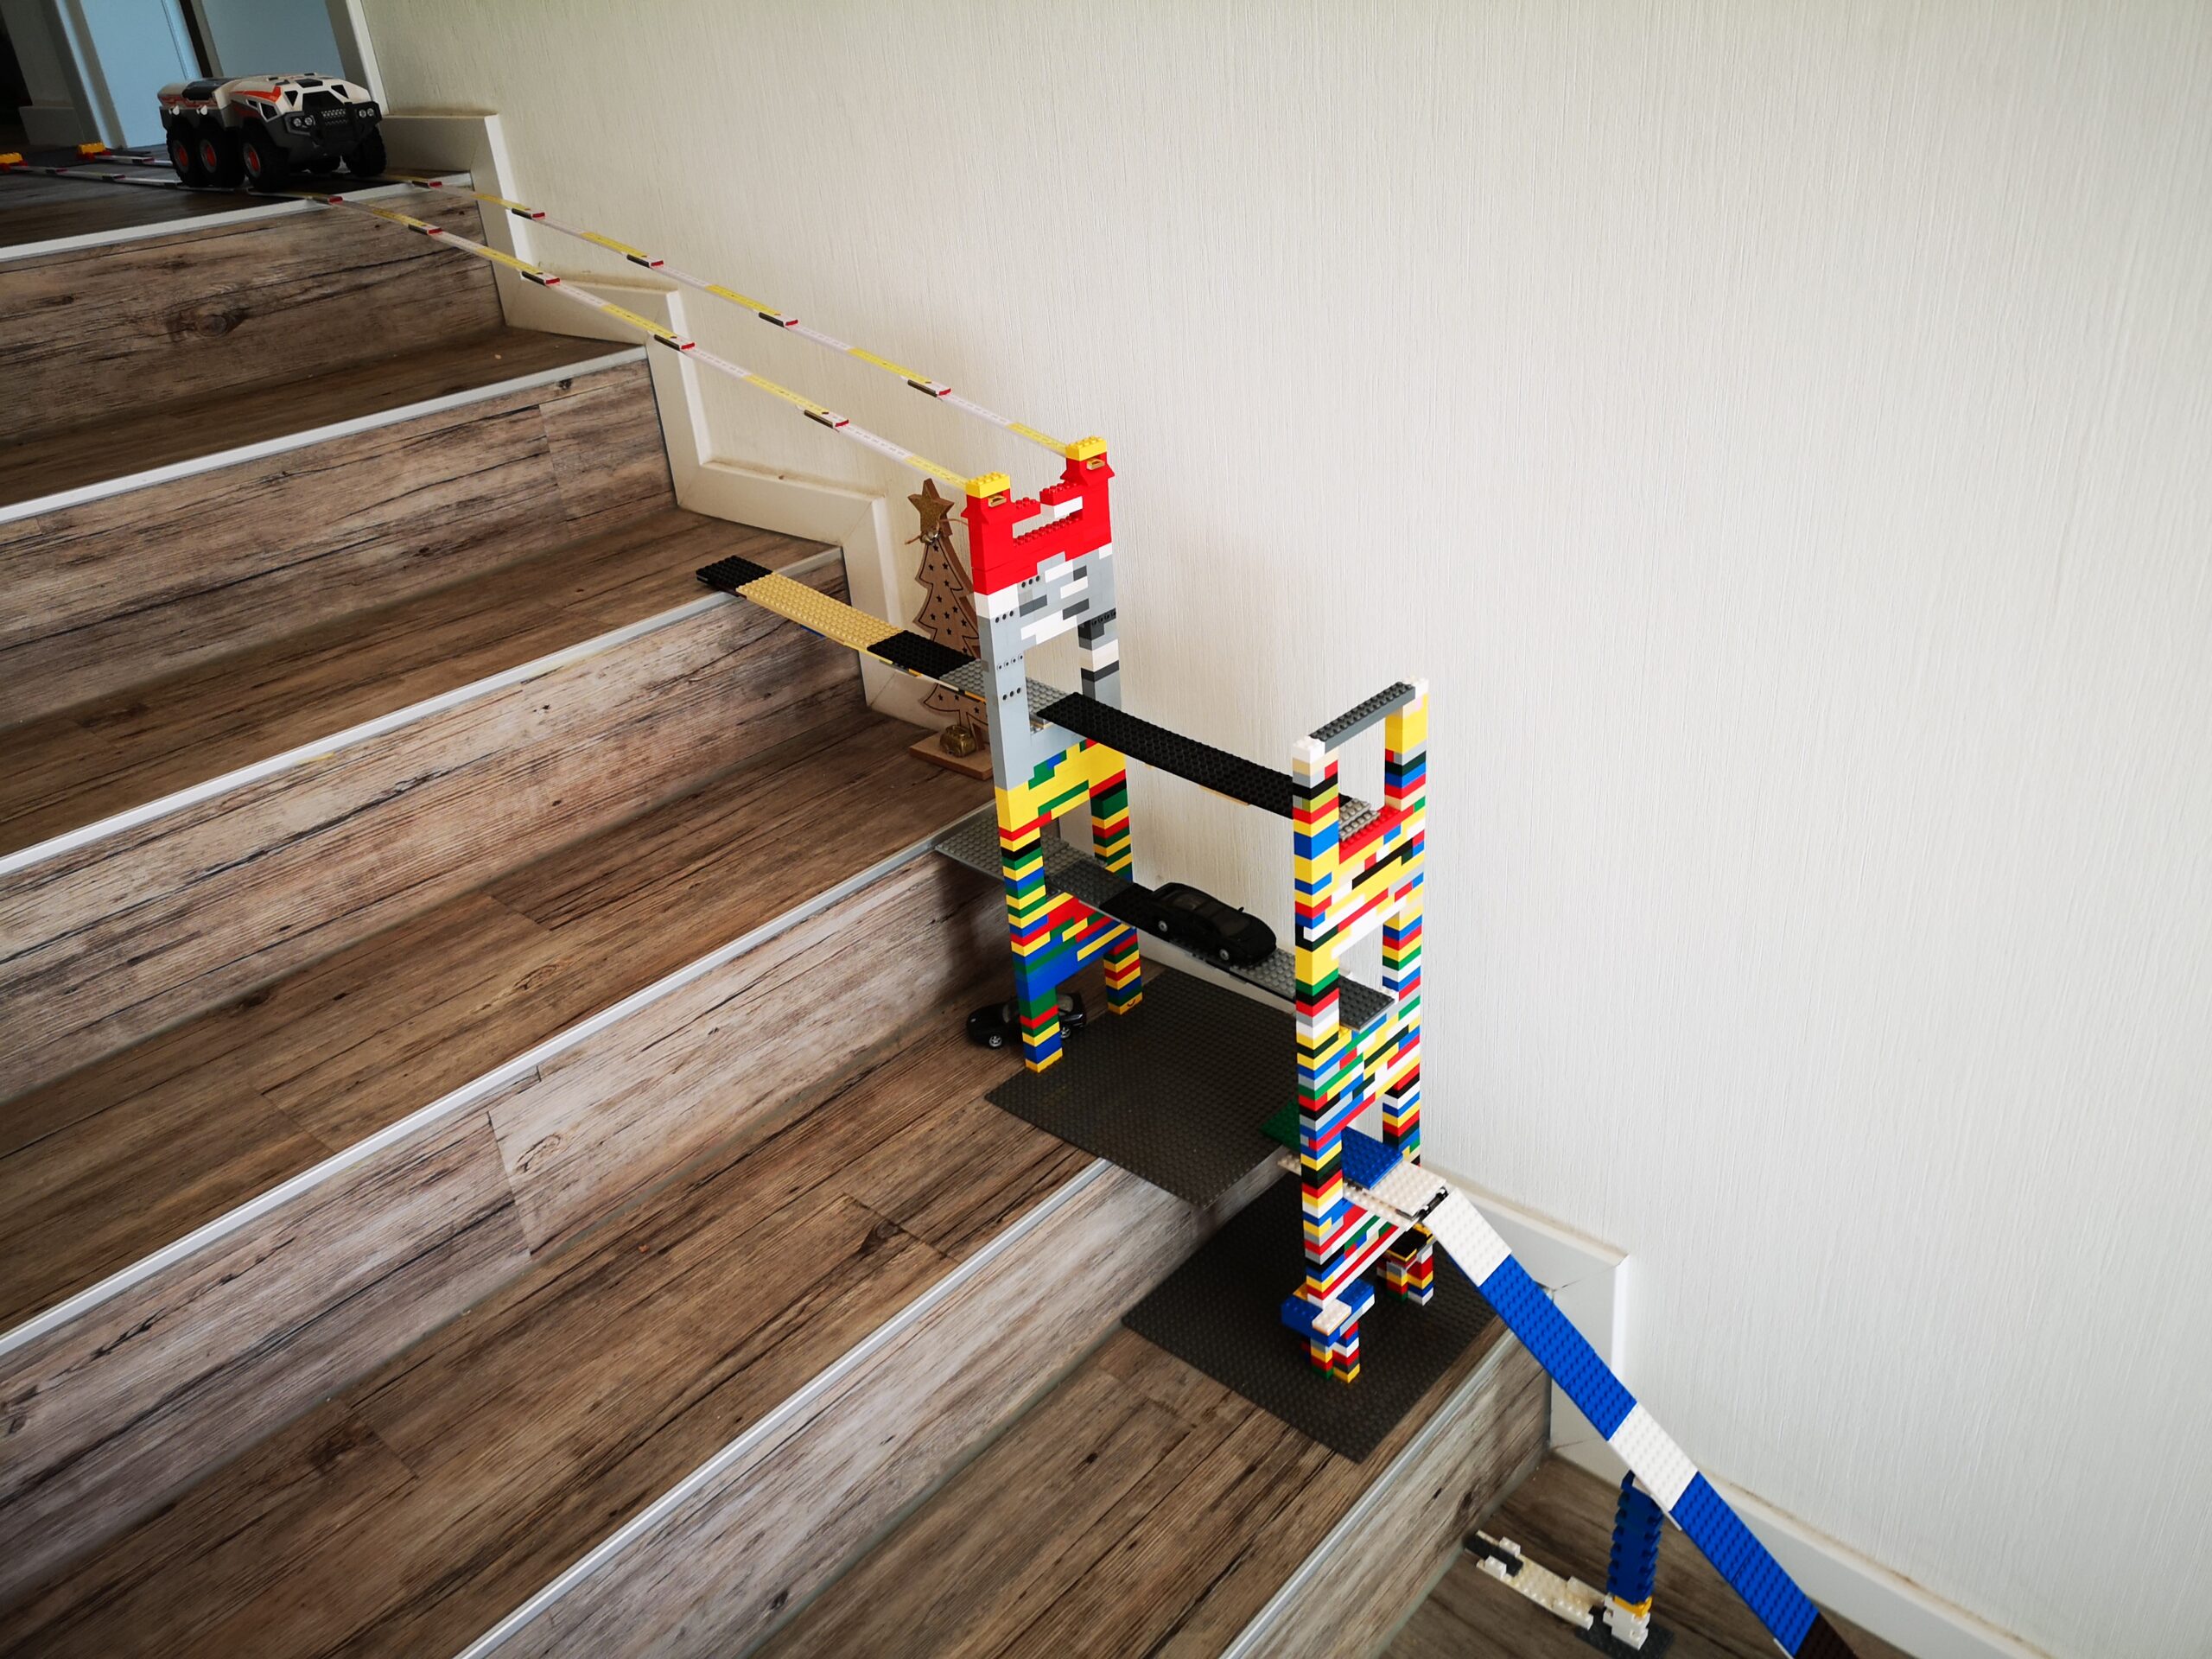 LEGO, building, creativity, Minecraft, bridge, stairs